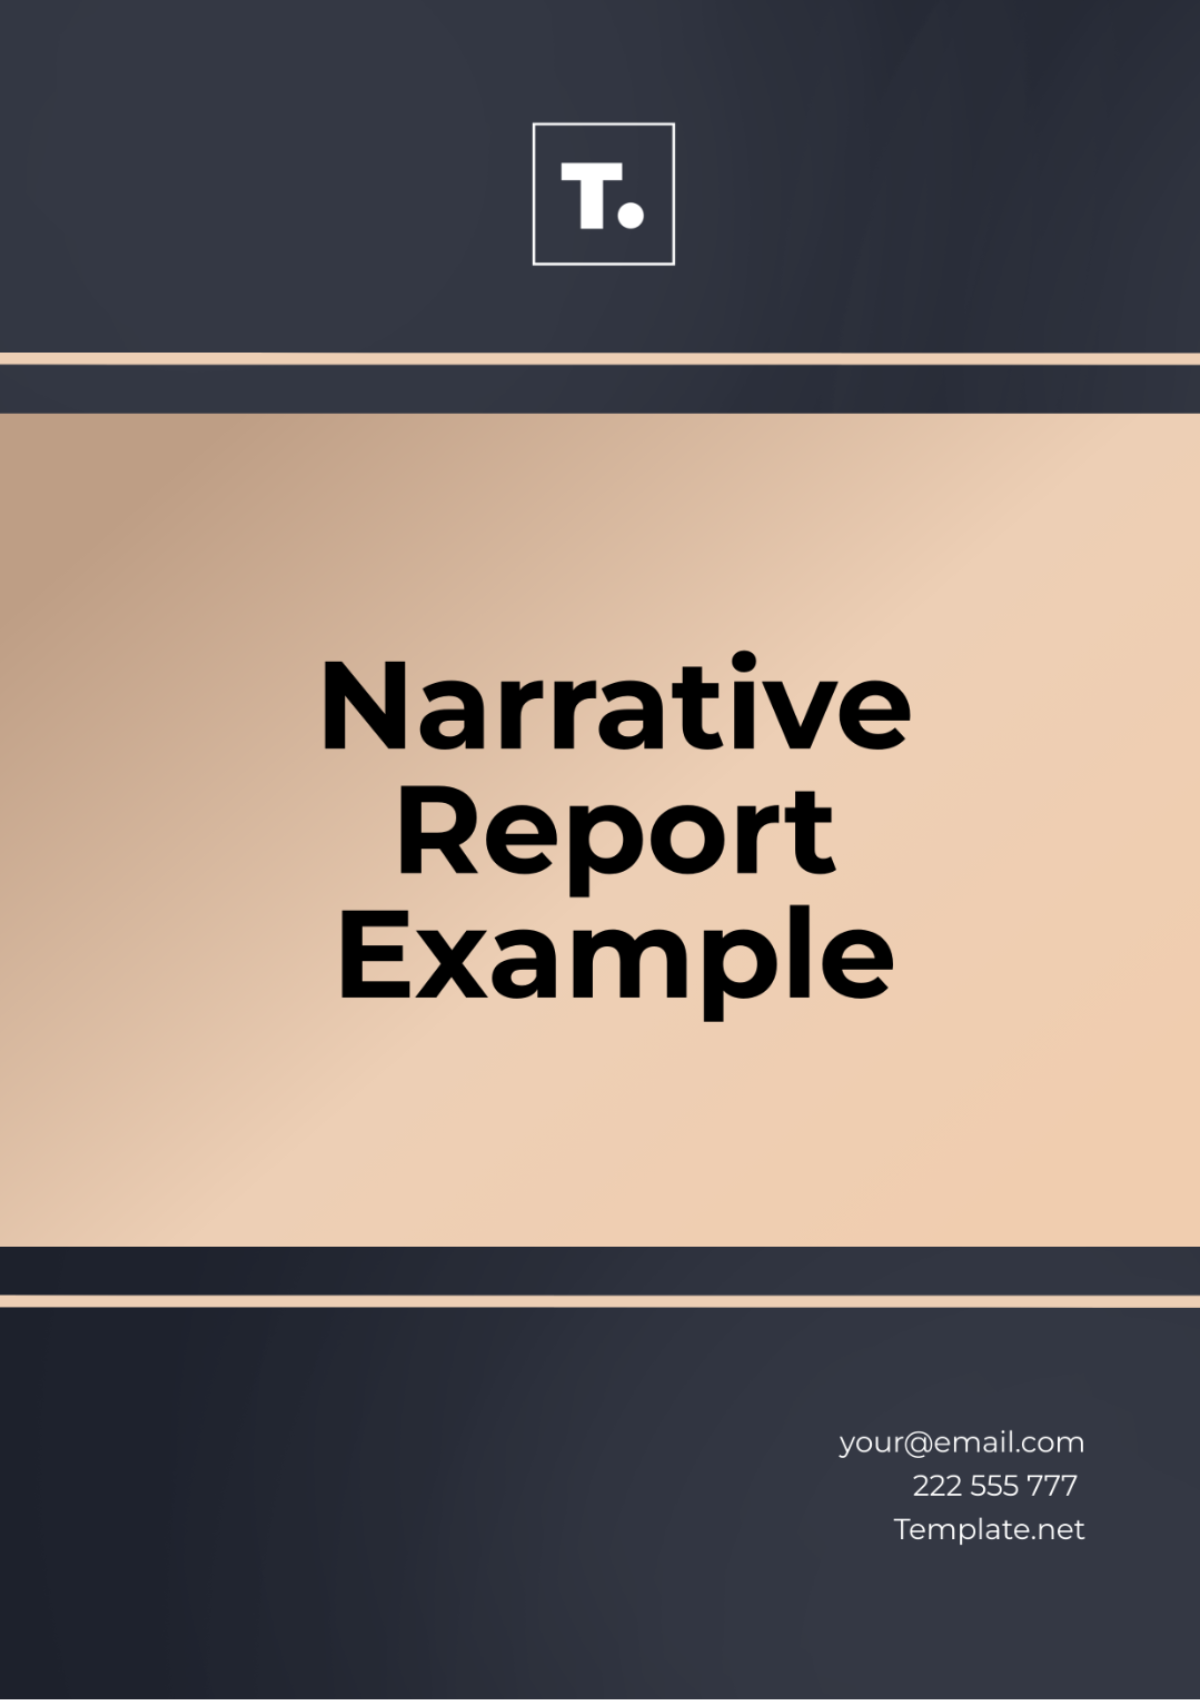 Narrative Report Example Template